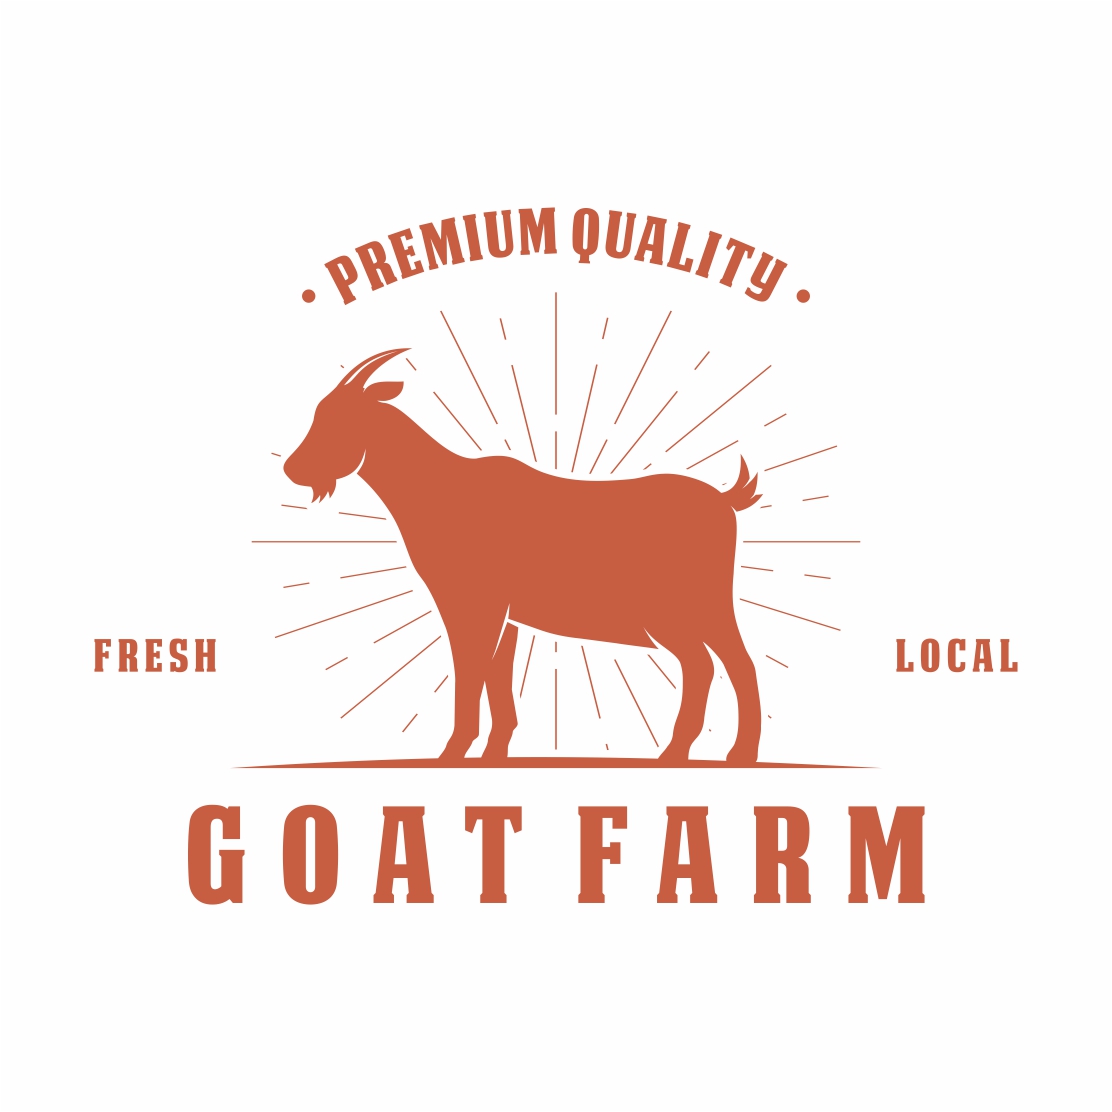 Goat Farm logo design - only 5$ preview image.